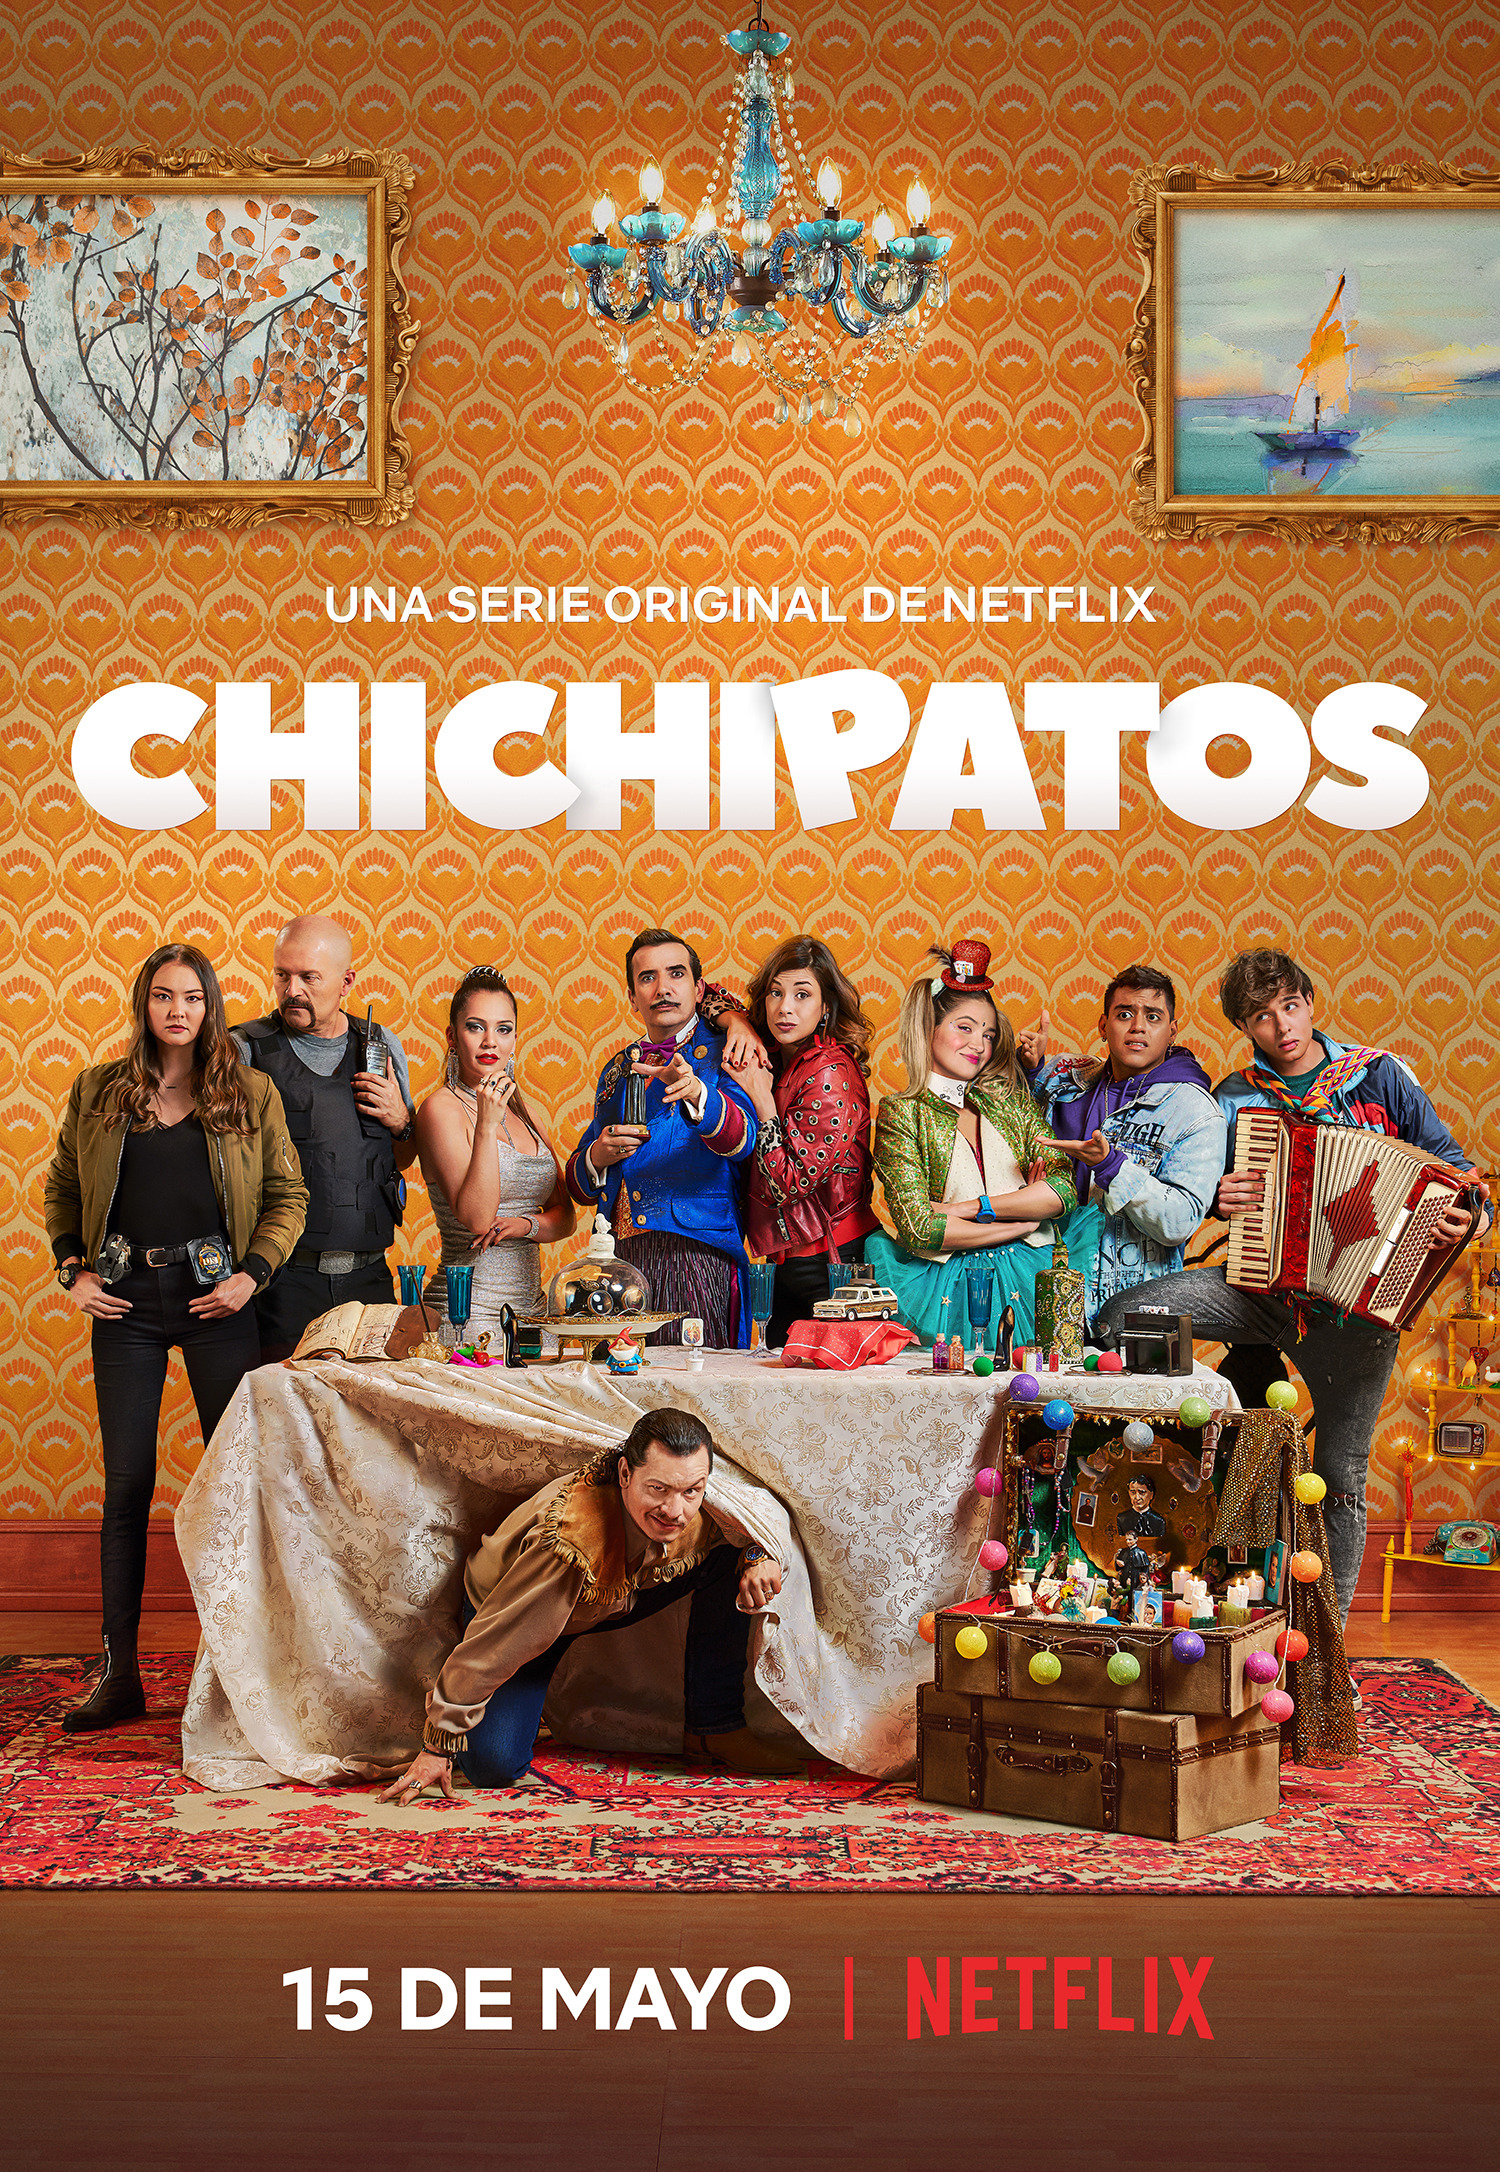 Mega Sized TV Poster Image for Chichipatos 